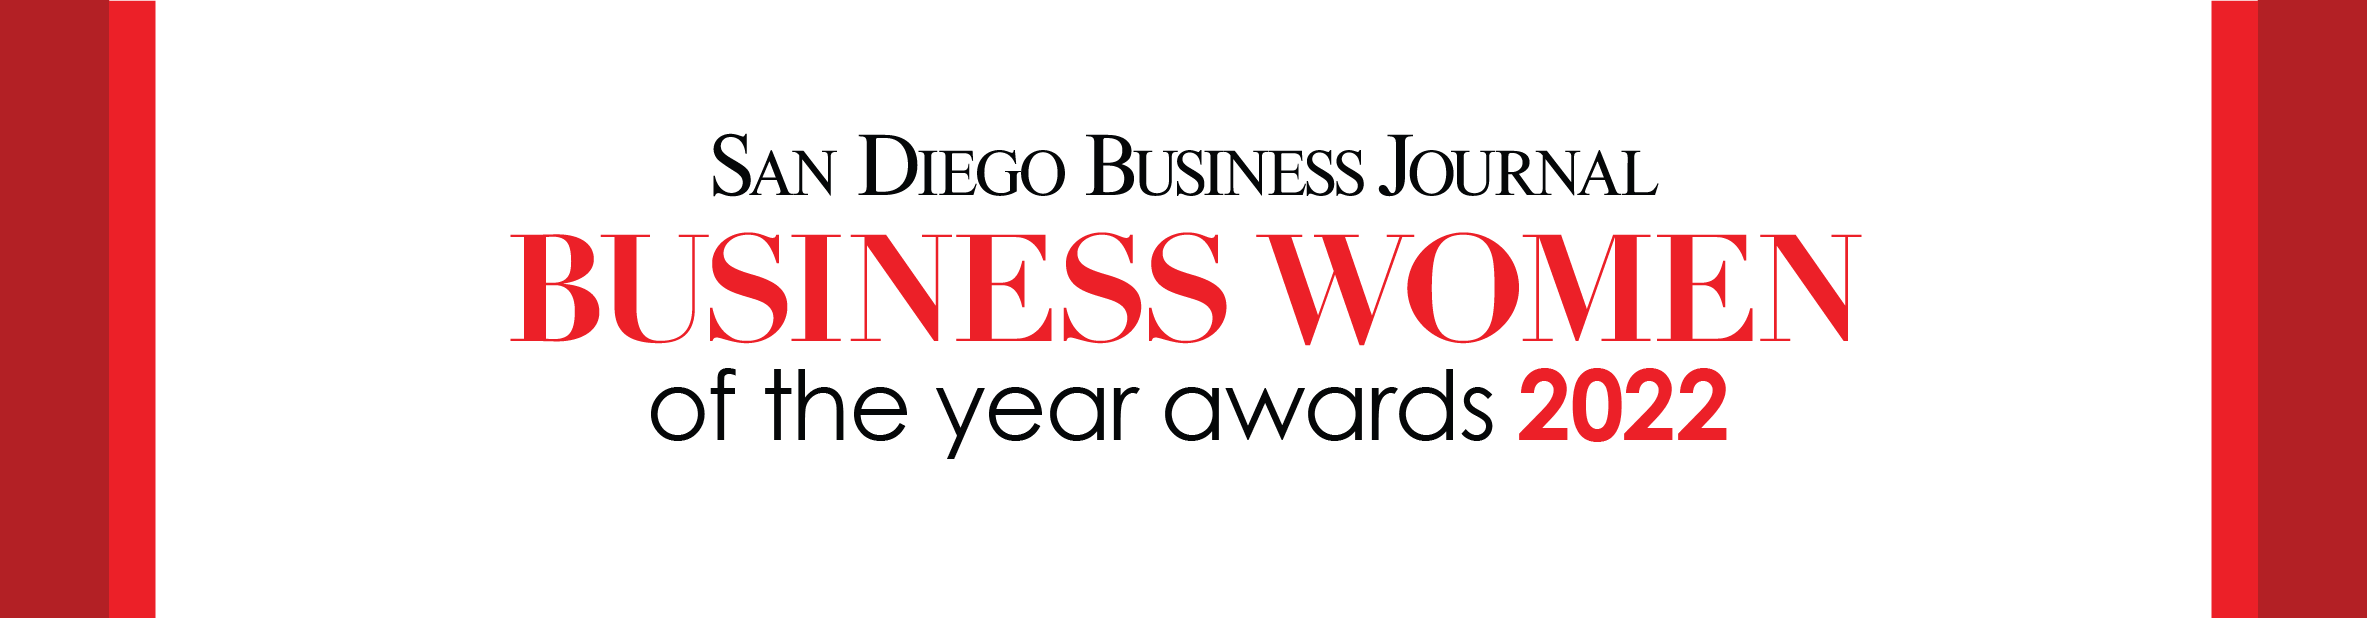 San Diego Business Journal Economics Trends